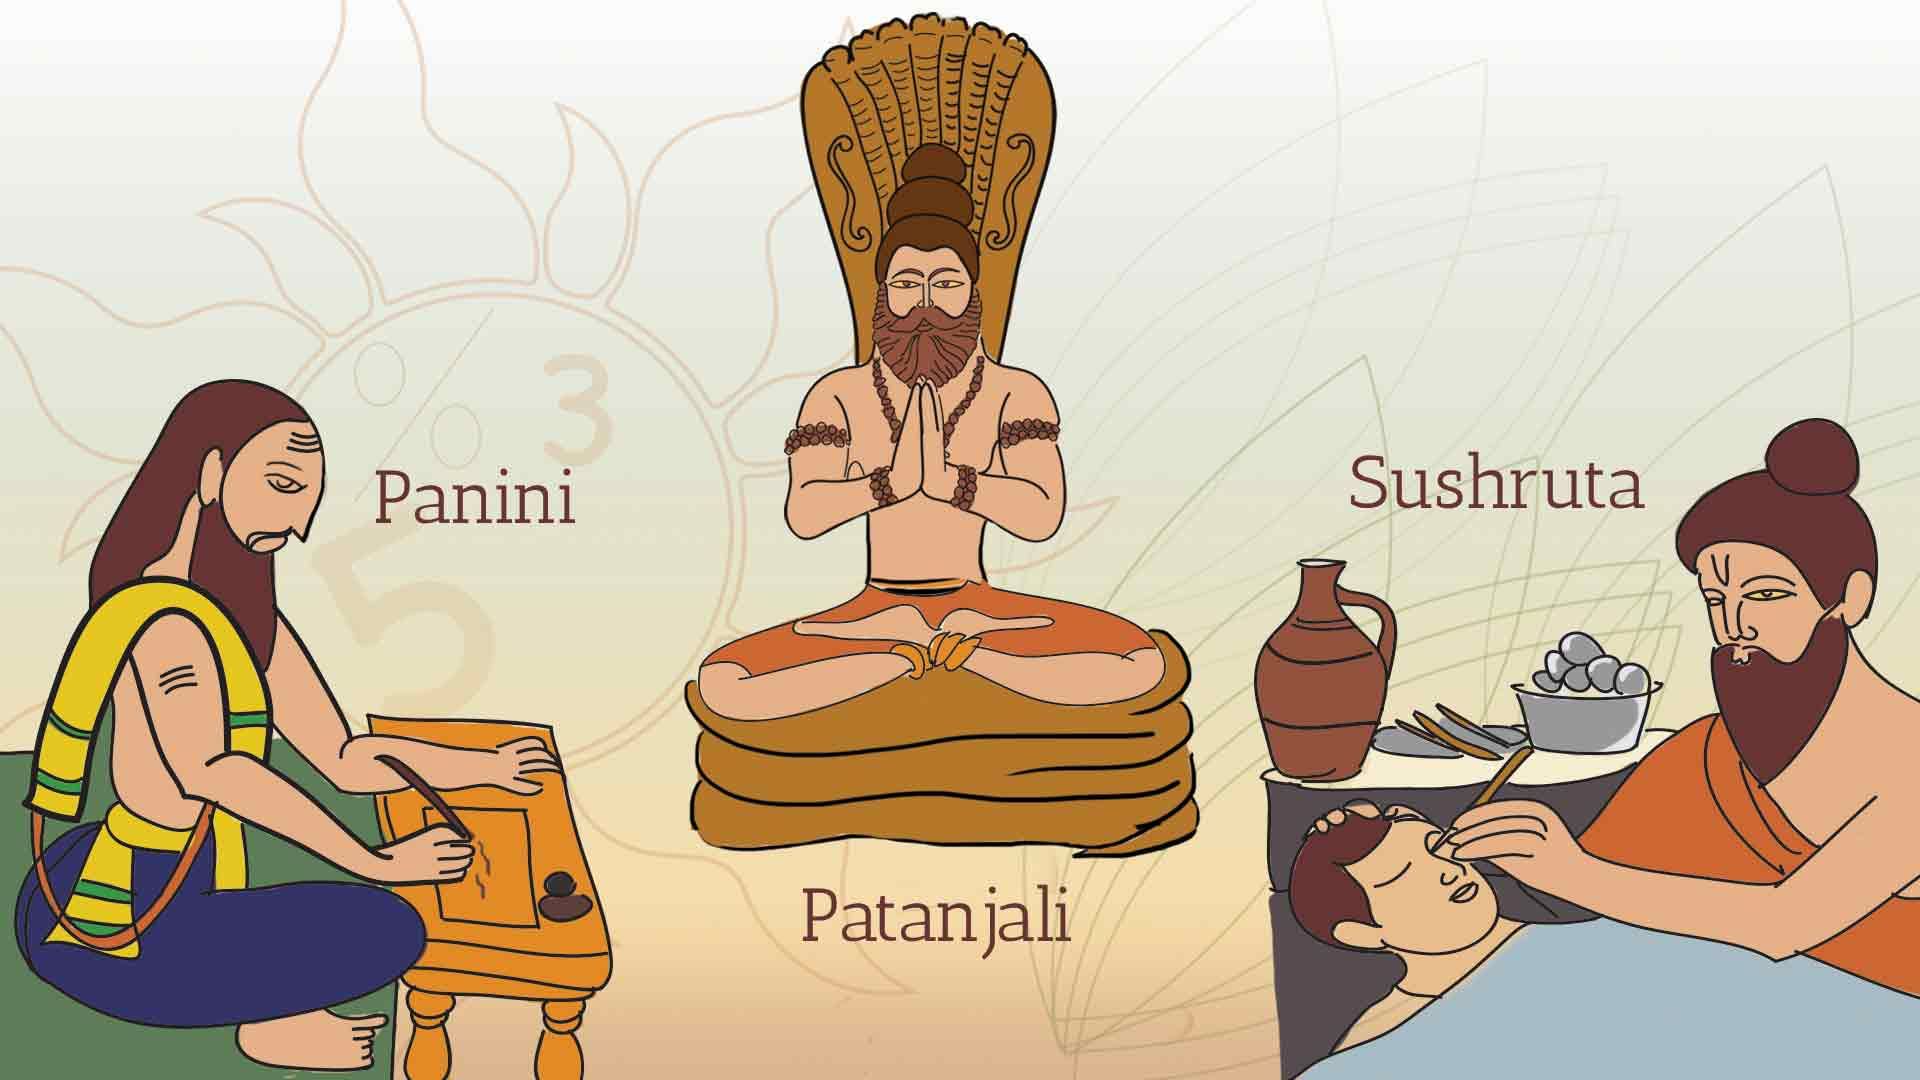 Sadhguru on Patanjali, Sushruta and Panini